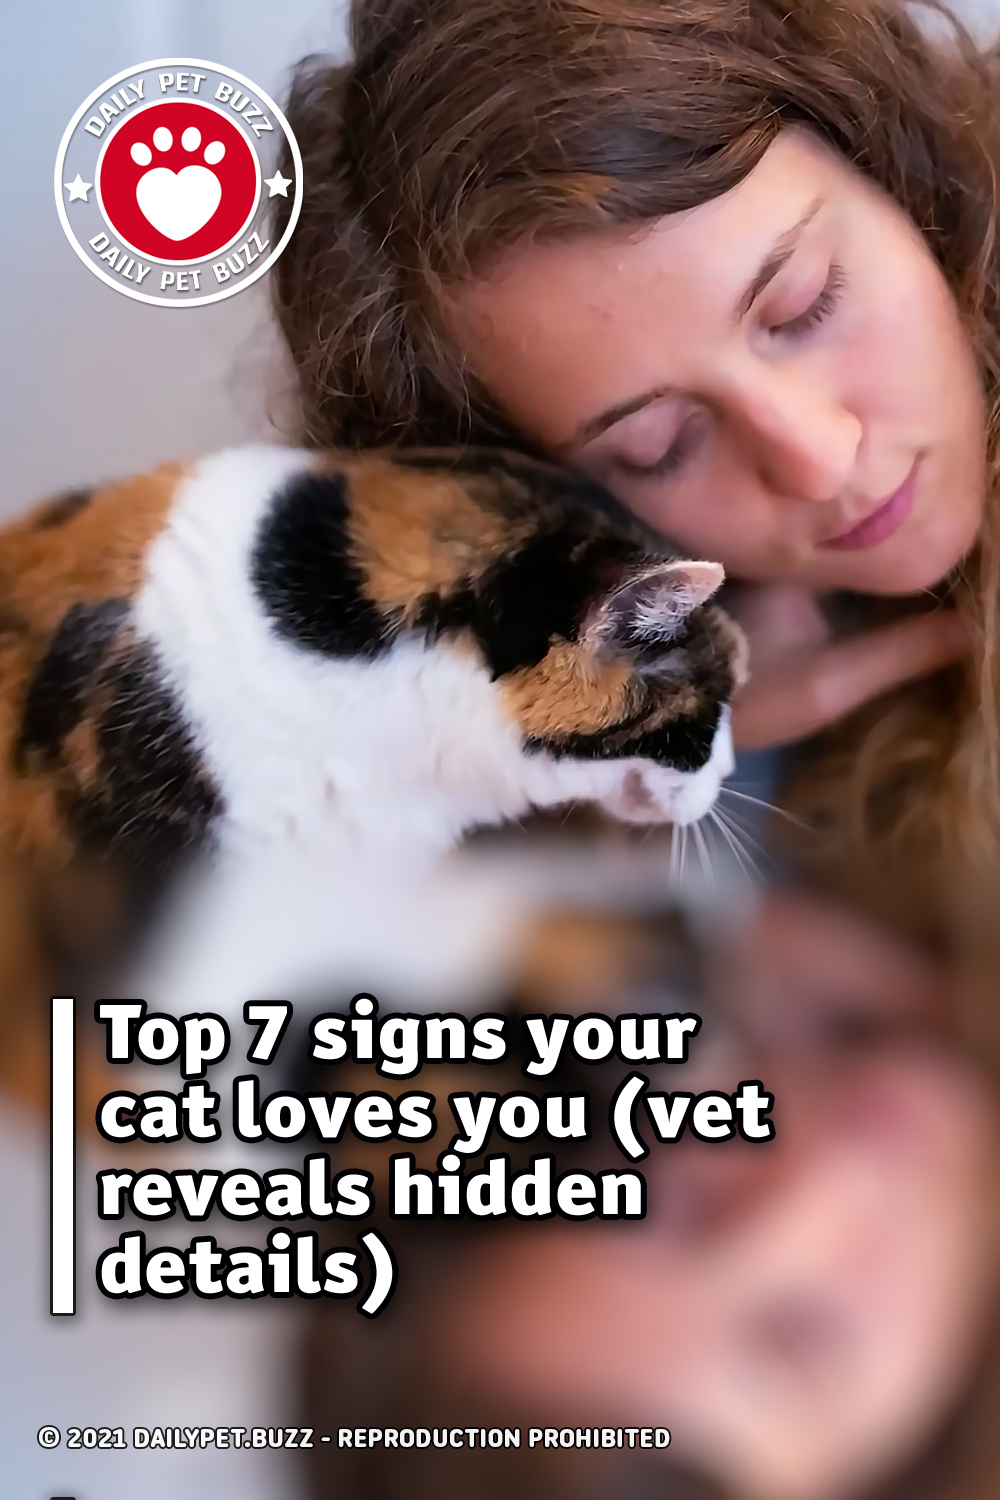 Top 7 signs your cat loves you (vet reveals hidden details)